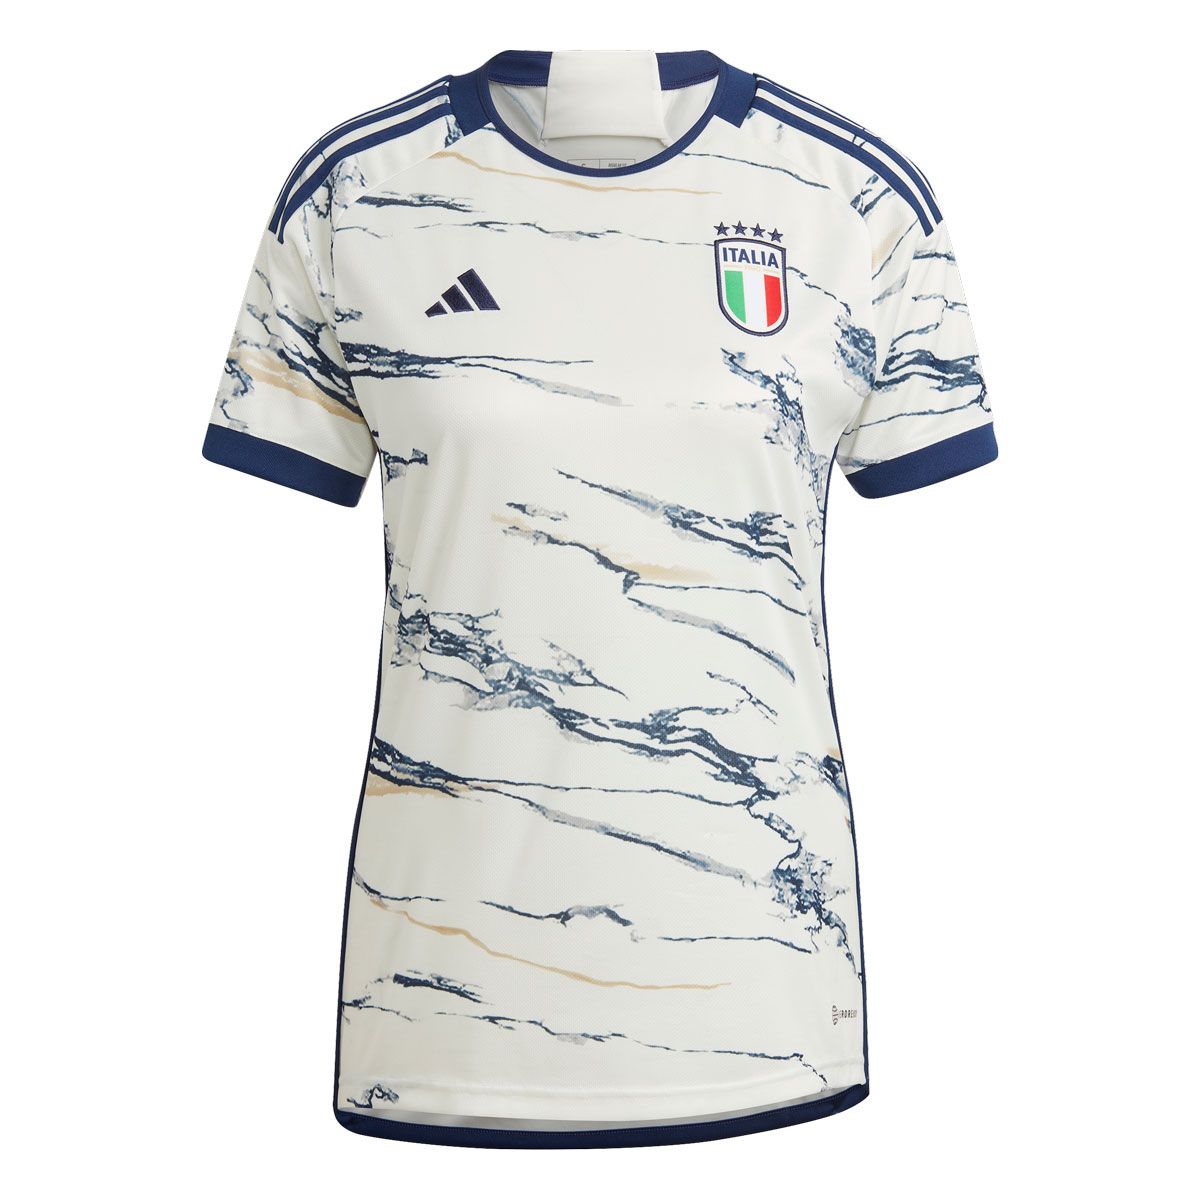 adidas Italy 23 Away Jersey - White, Men's Soccer